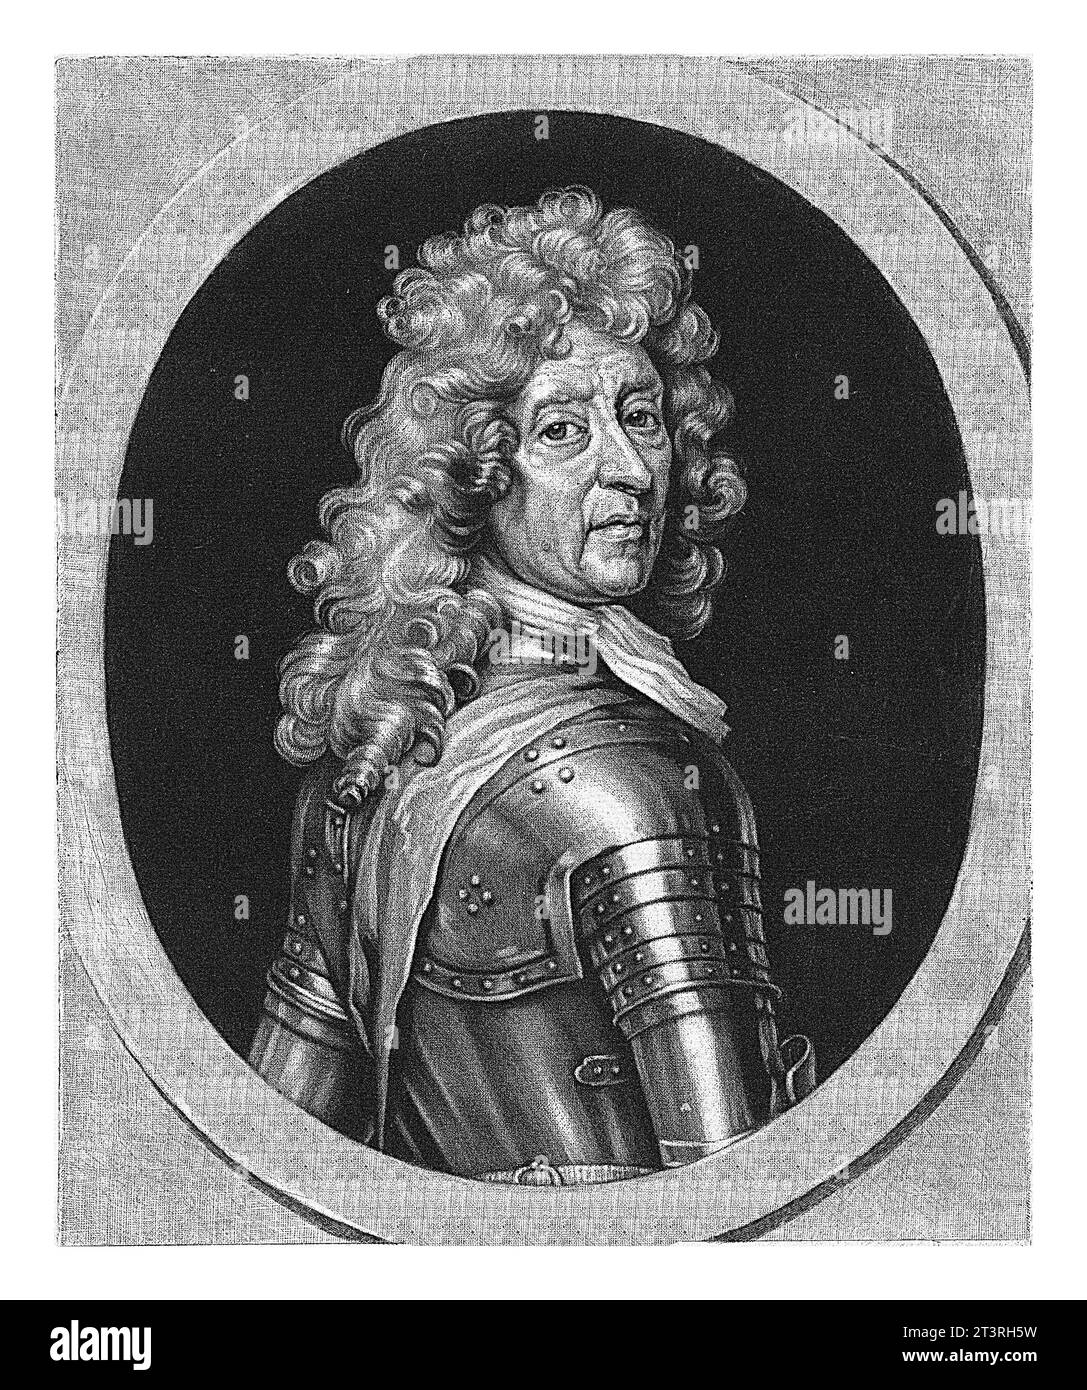 Portrait of Friedrich Arnaud Duke of Schomberg, Jacob Gole, after Gottfried Kneller, 1670 - 1724 The General Friedrich Arnaud Duke of Schomberg. He we Stock Photo